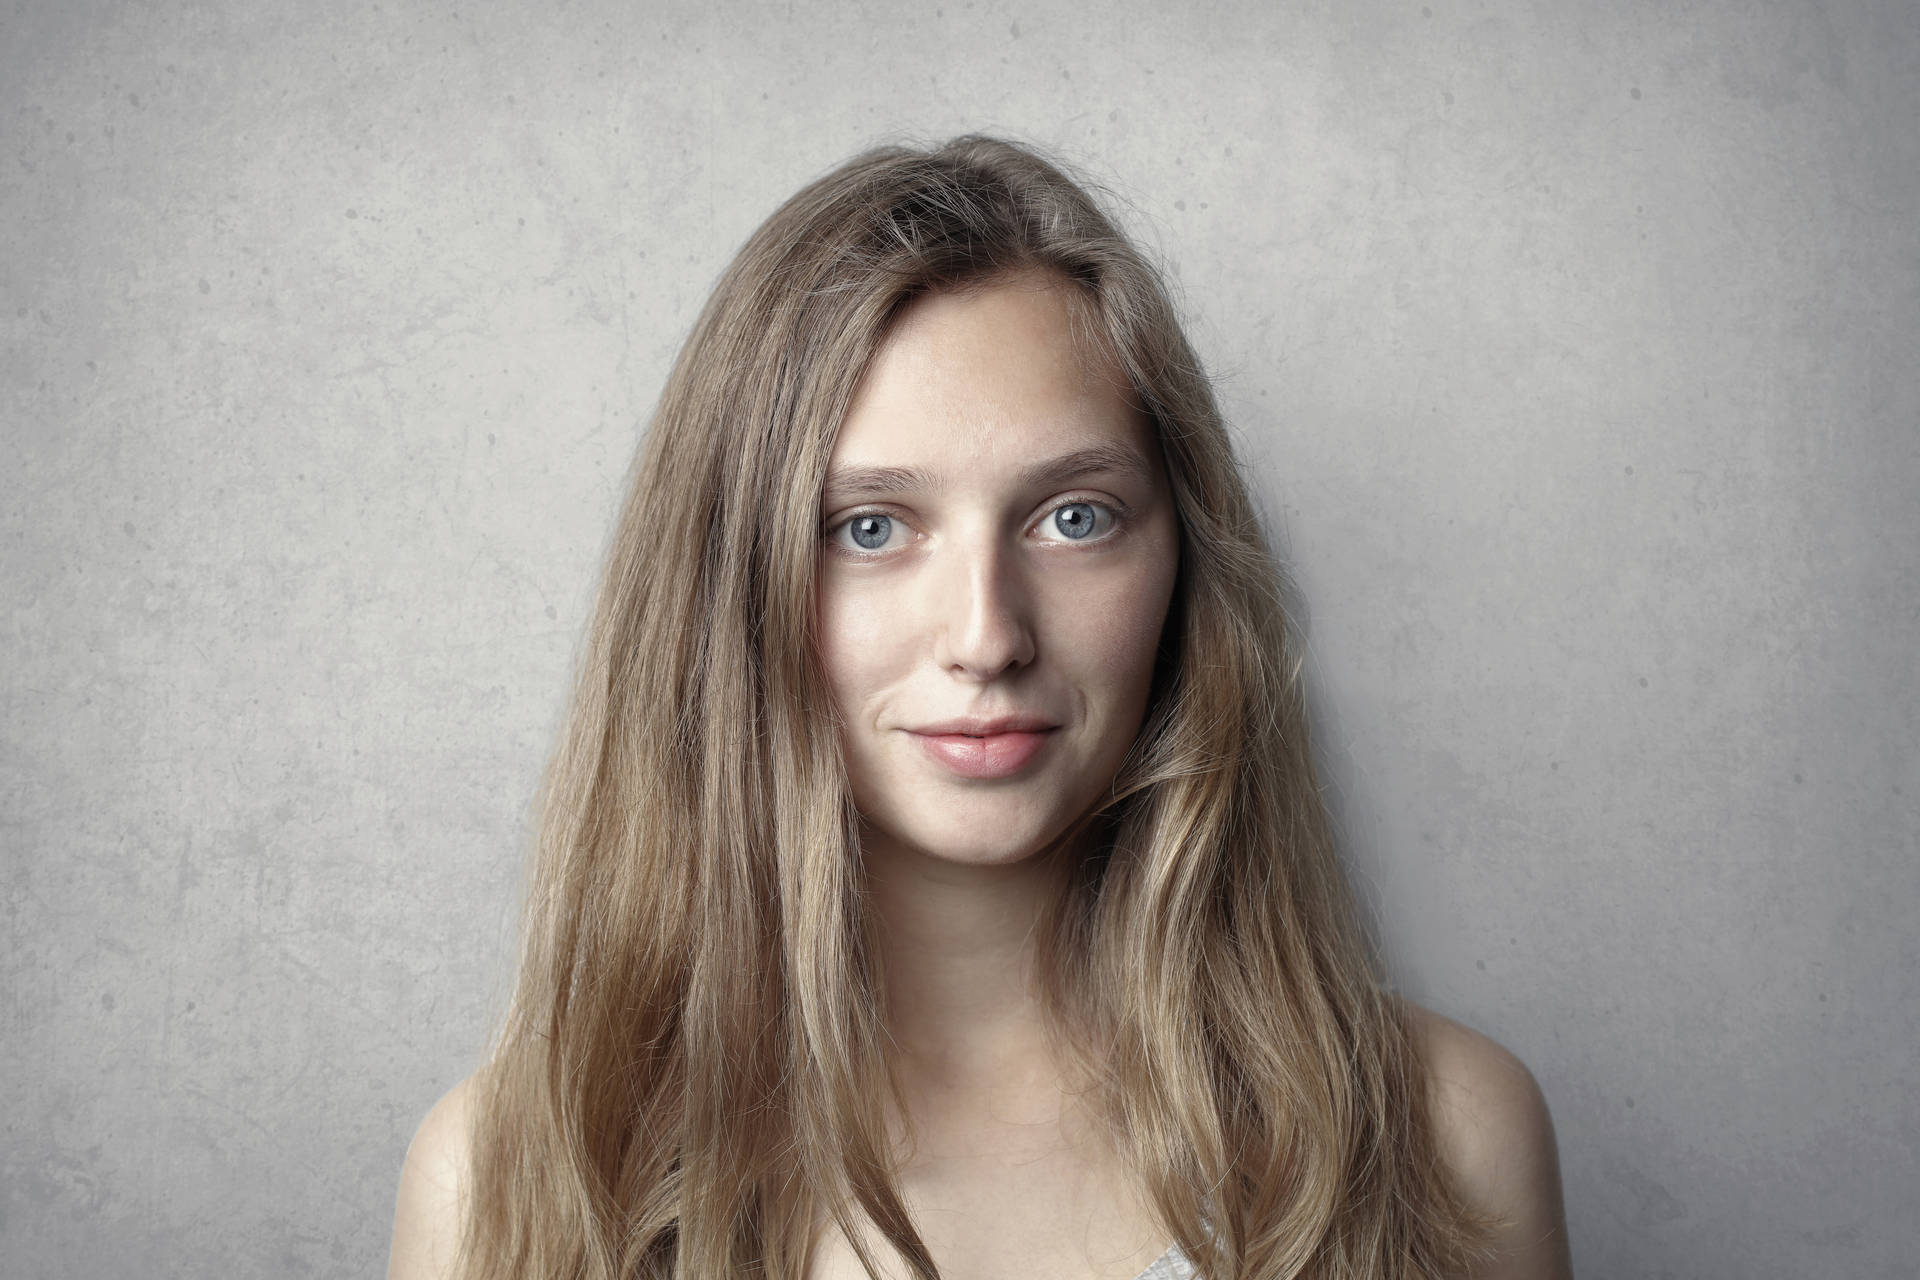 Woman With Grey Eyes Headshot Wallpaper